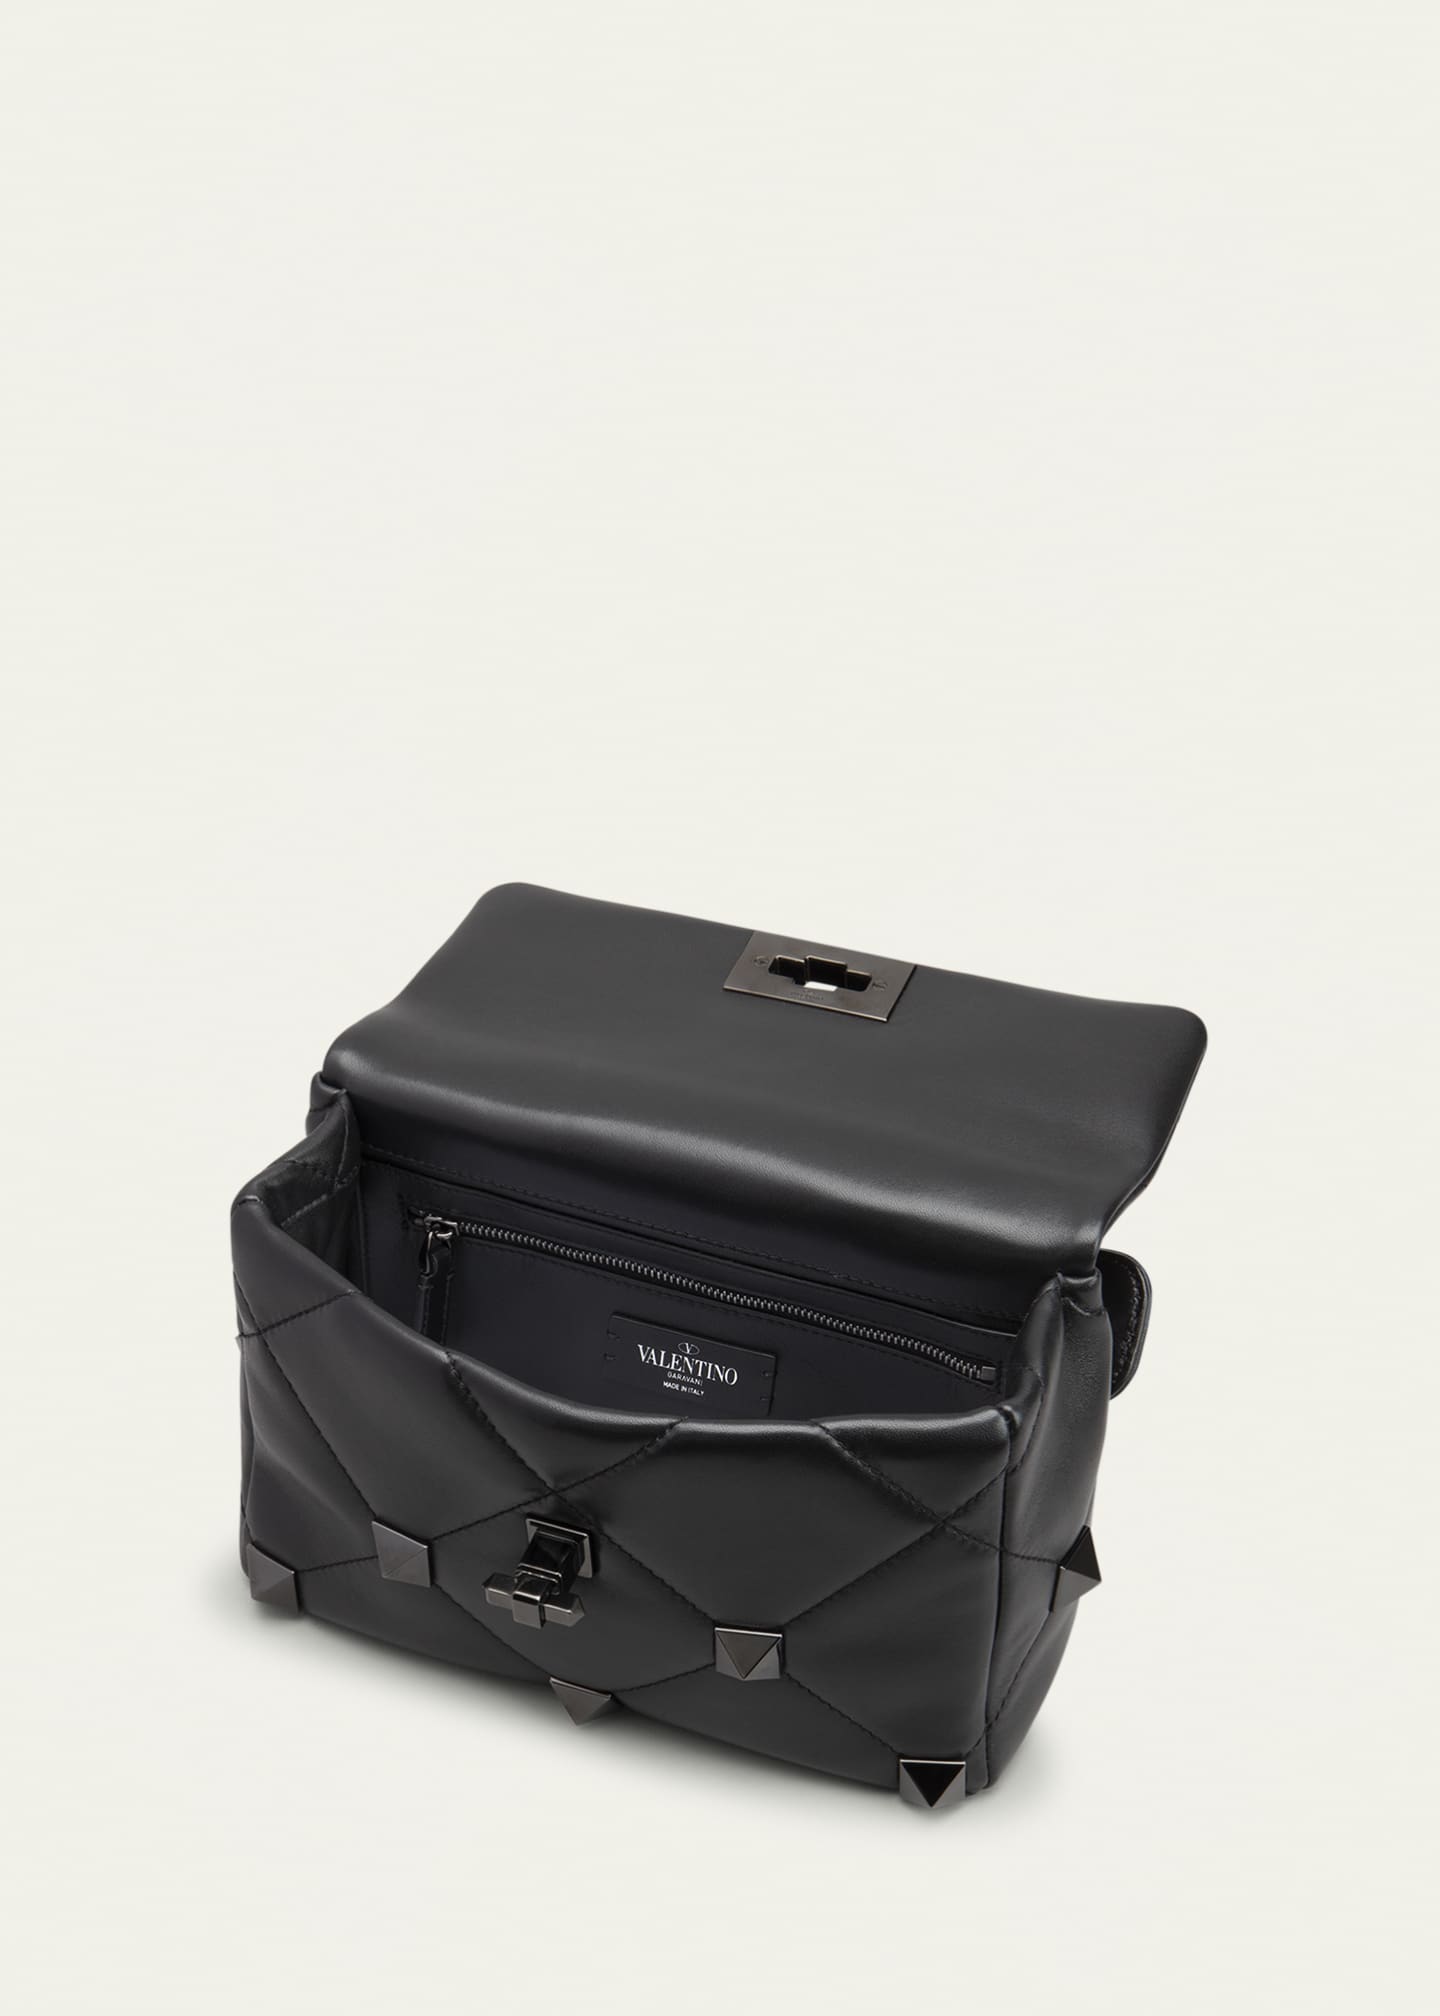 Valentino Rockstud Quilted Small Shoulder Bag, Black